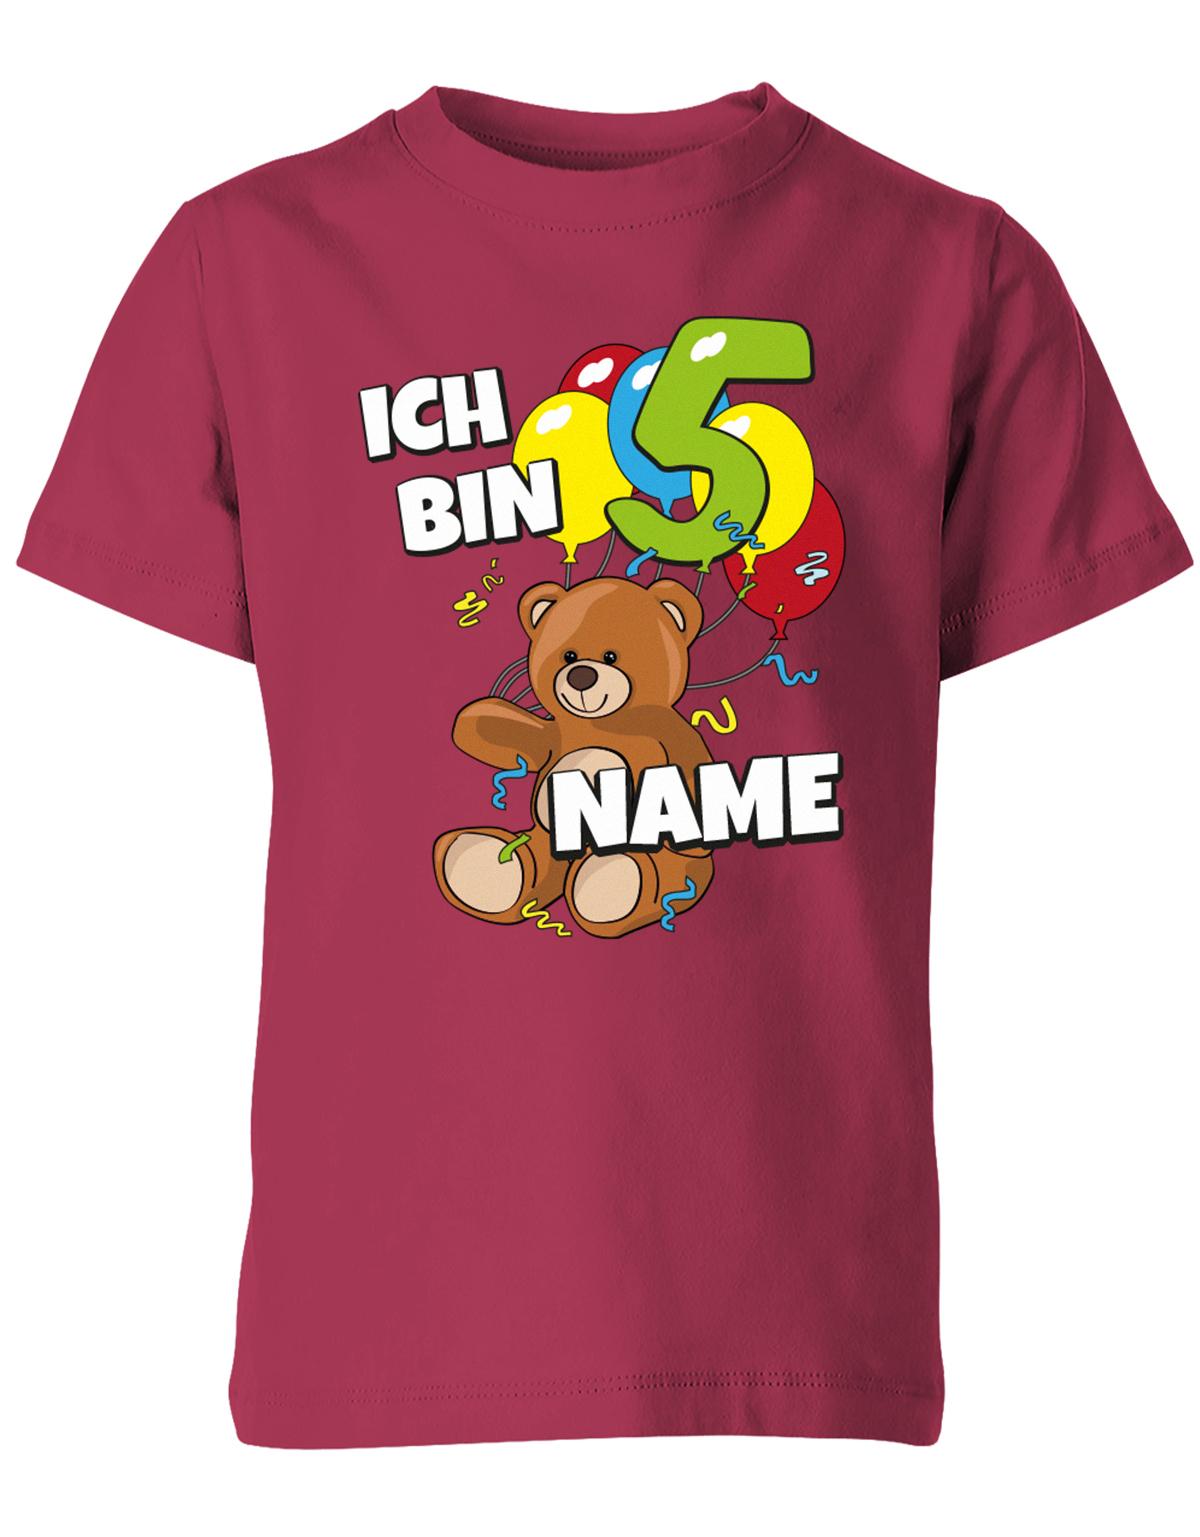 ich-bin-5-teddy-luftballons-kinder-shirt-sorbet